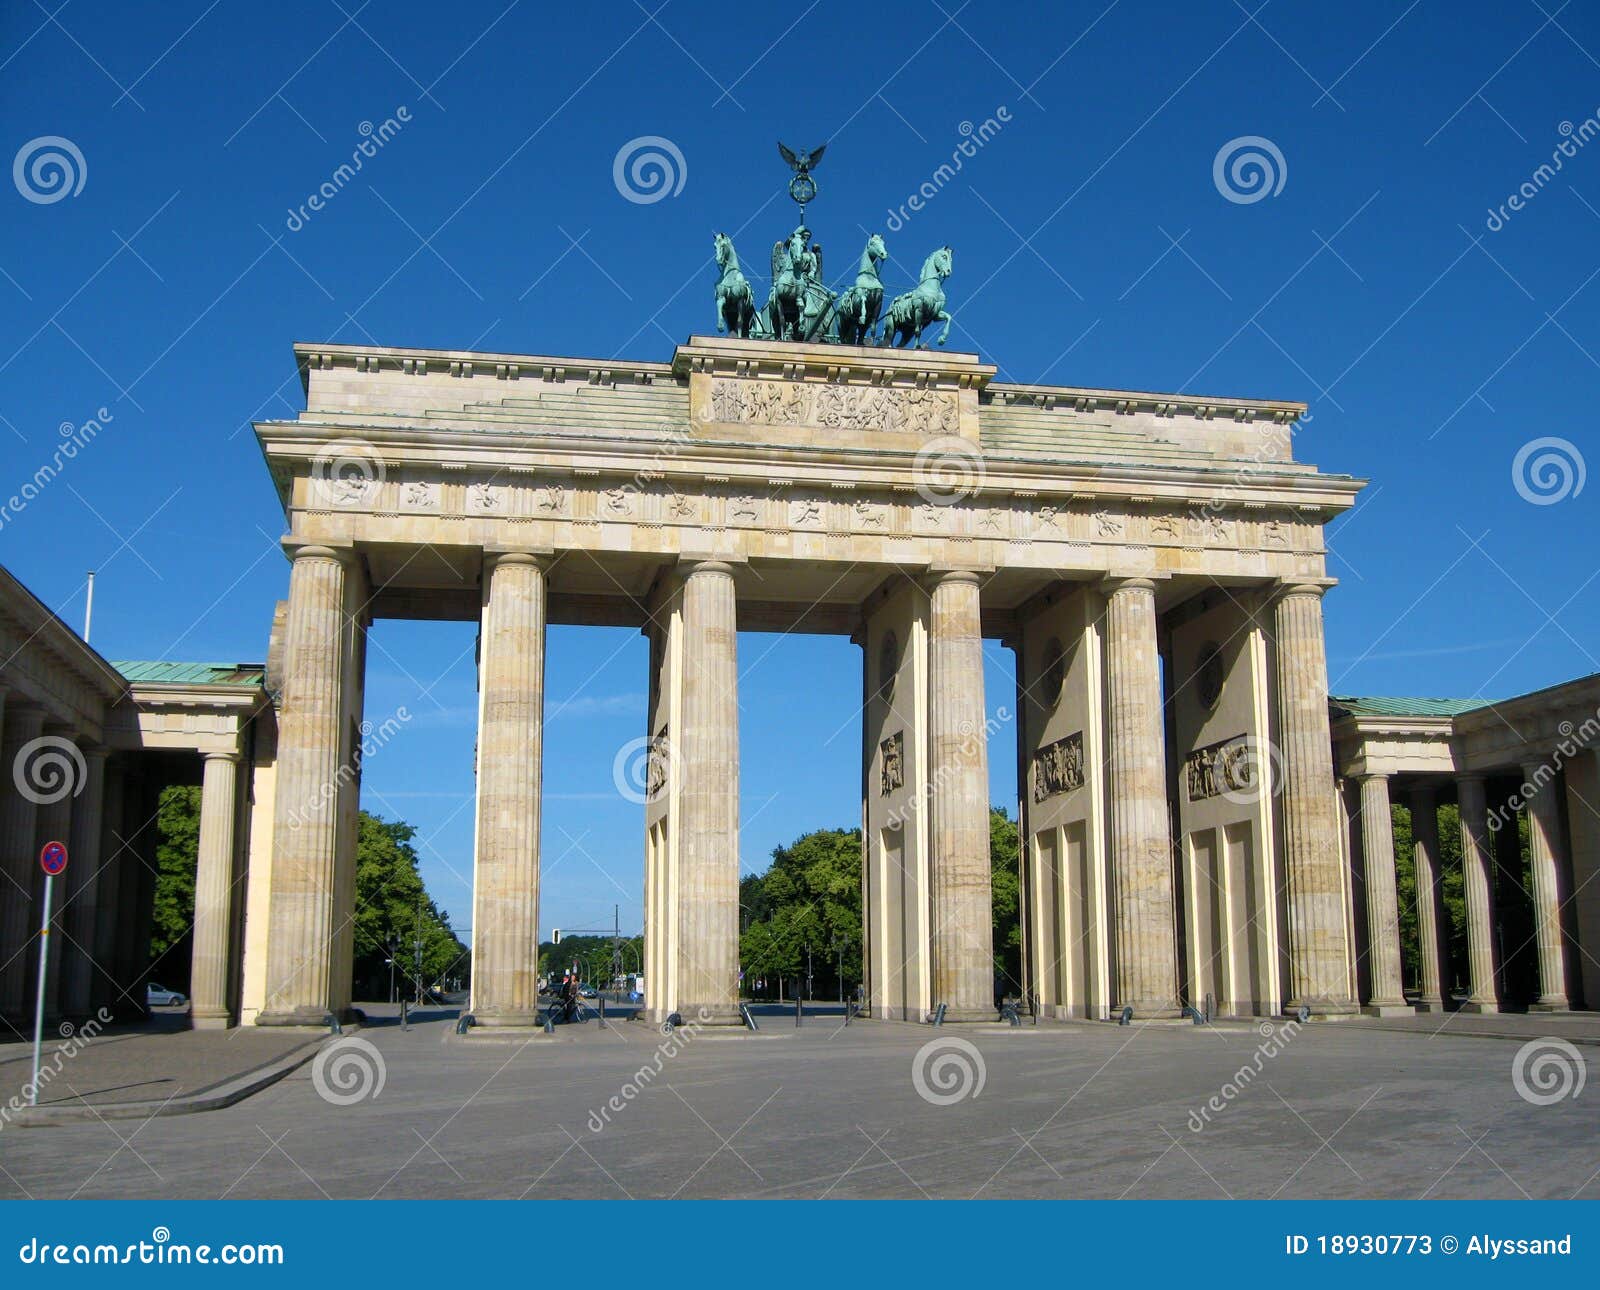 brandenburg gate in berlin